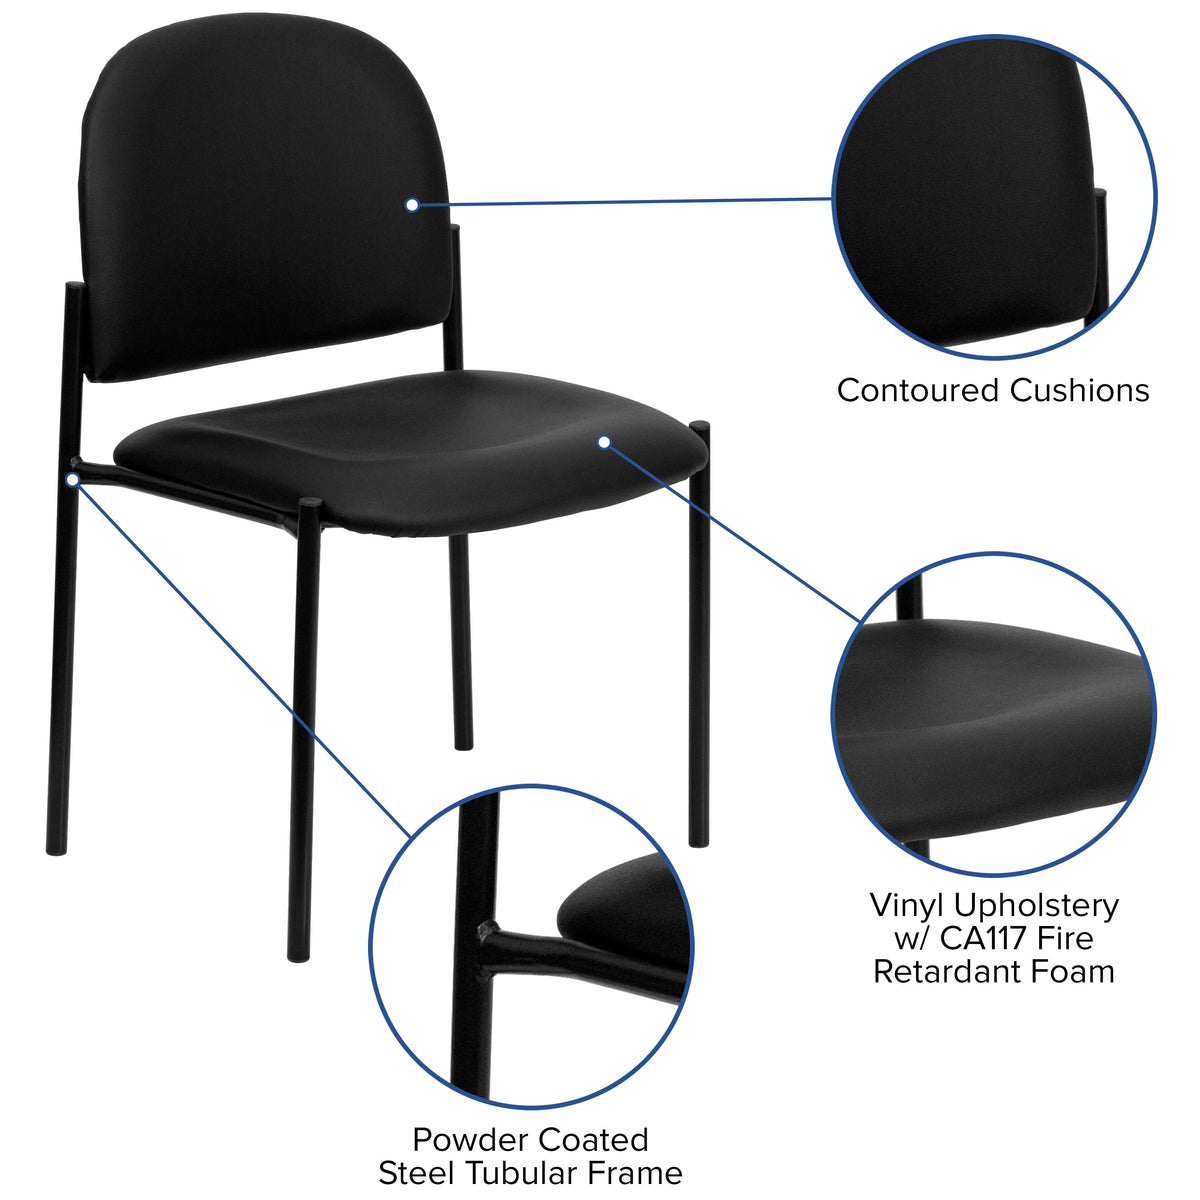 Black Vinyl |#| Comfort Black Vinyl Stackable Steel Side Reception Chair - Hospitality Seating